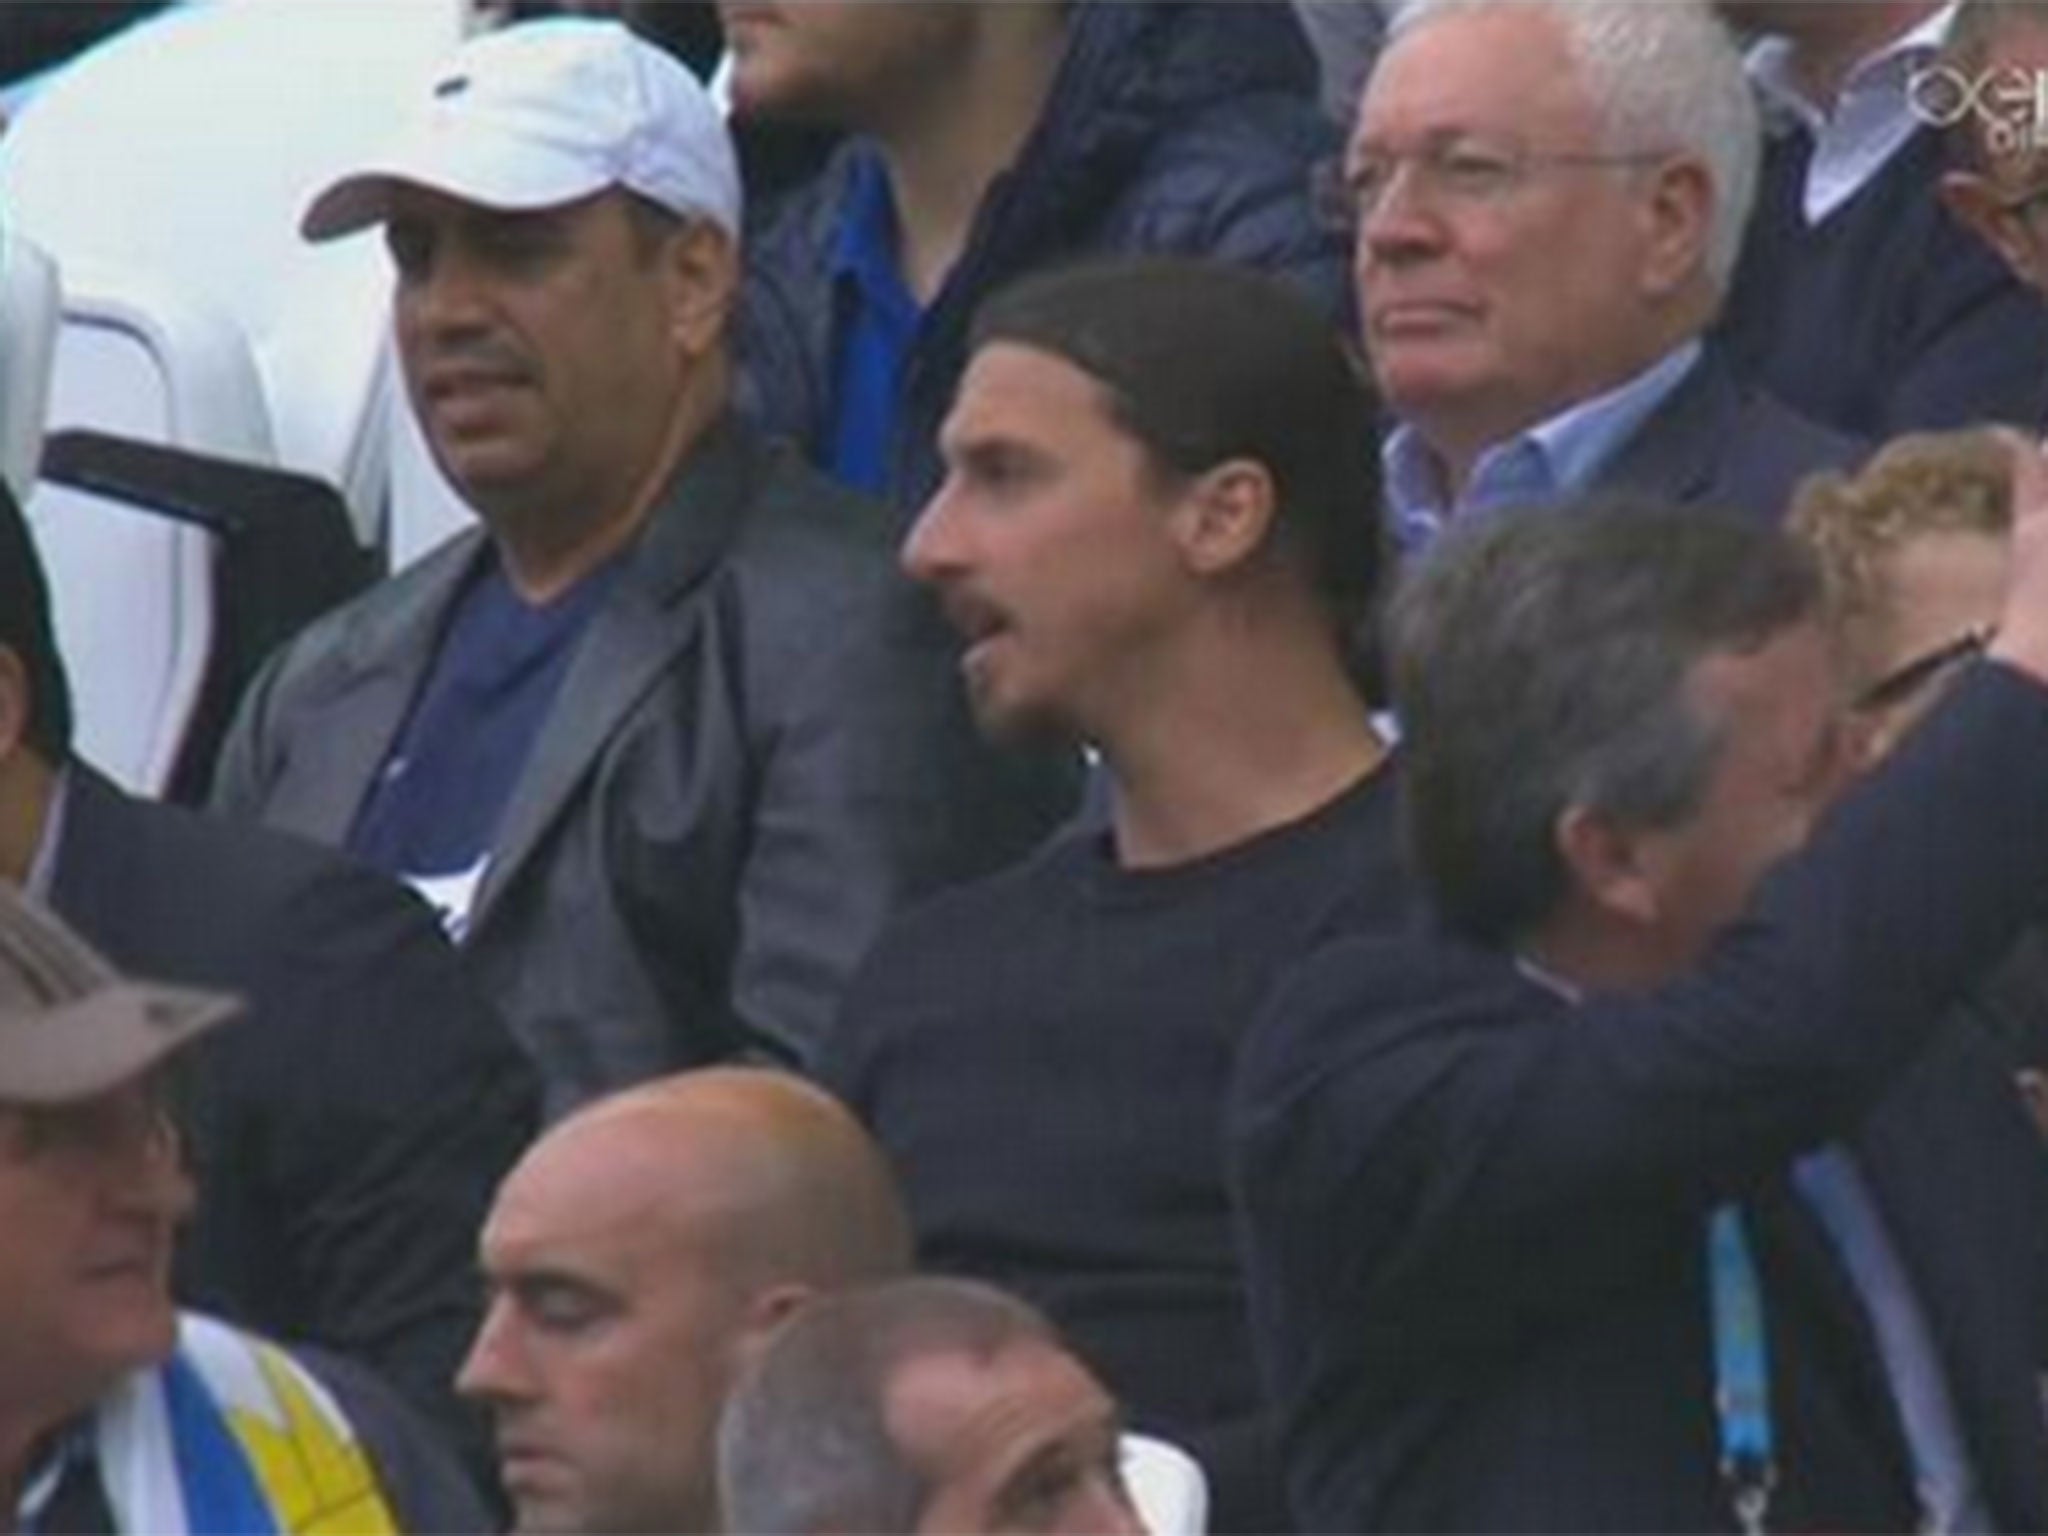 Zlatan Ibrahimovic was in Sao Paulo to see England face Uruguay